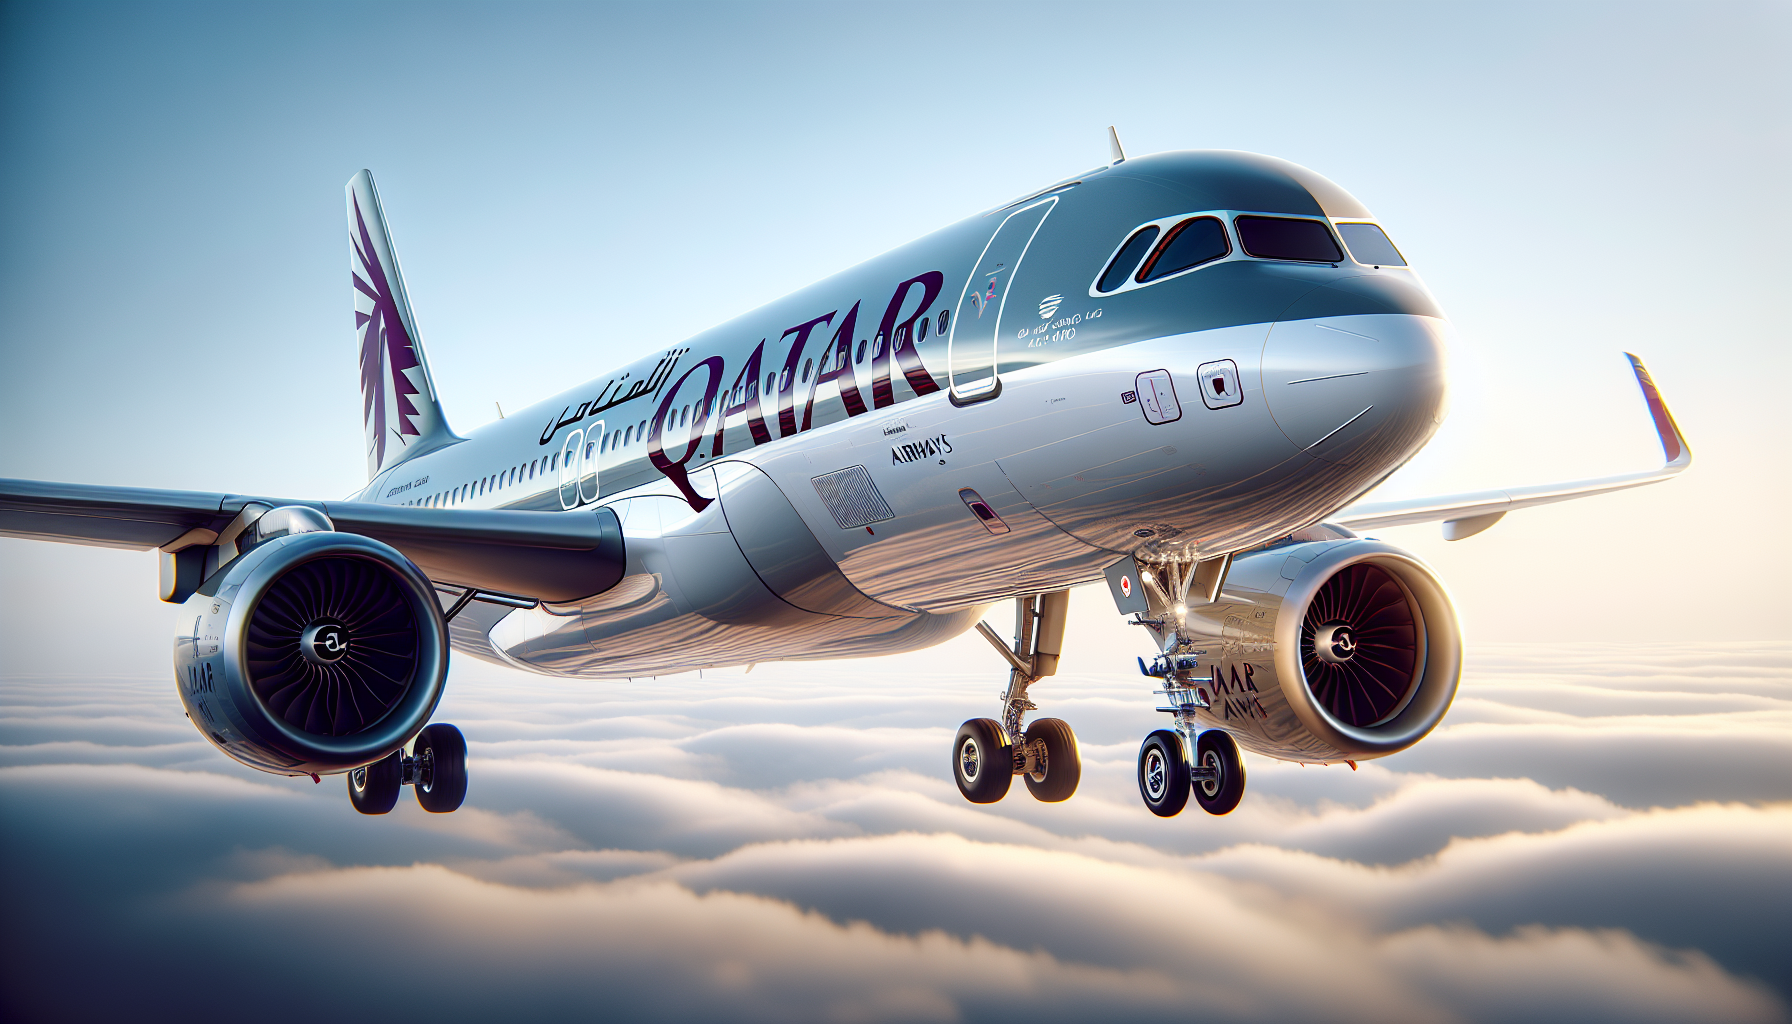 9-hour Qatar Airways flight from Dar es Salaam to Doha onboard an Airbus A320